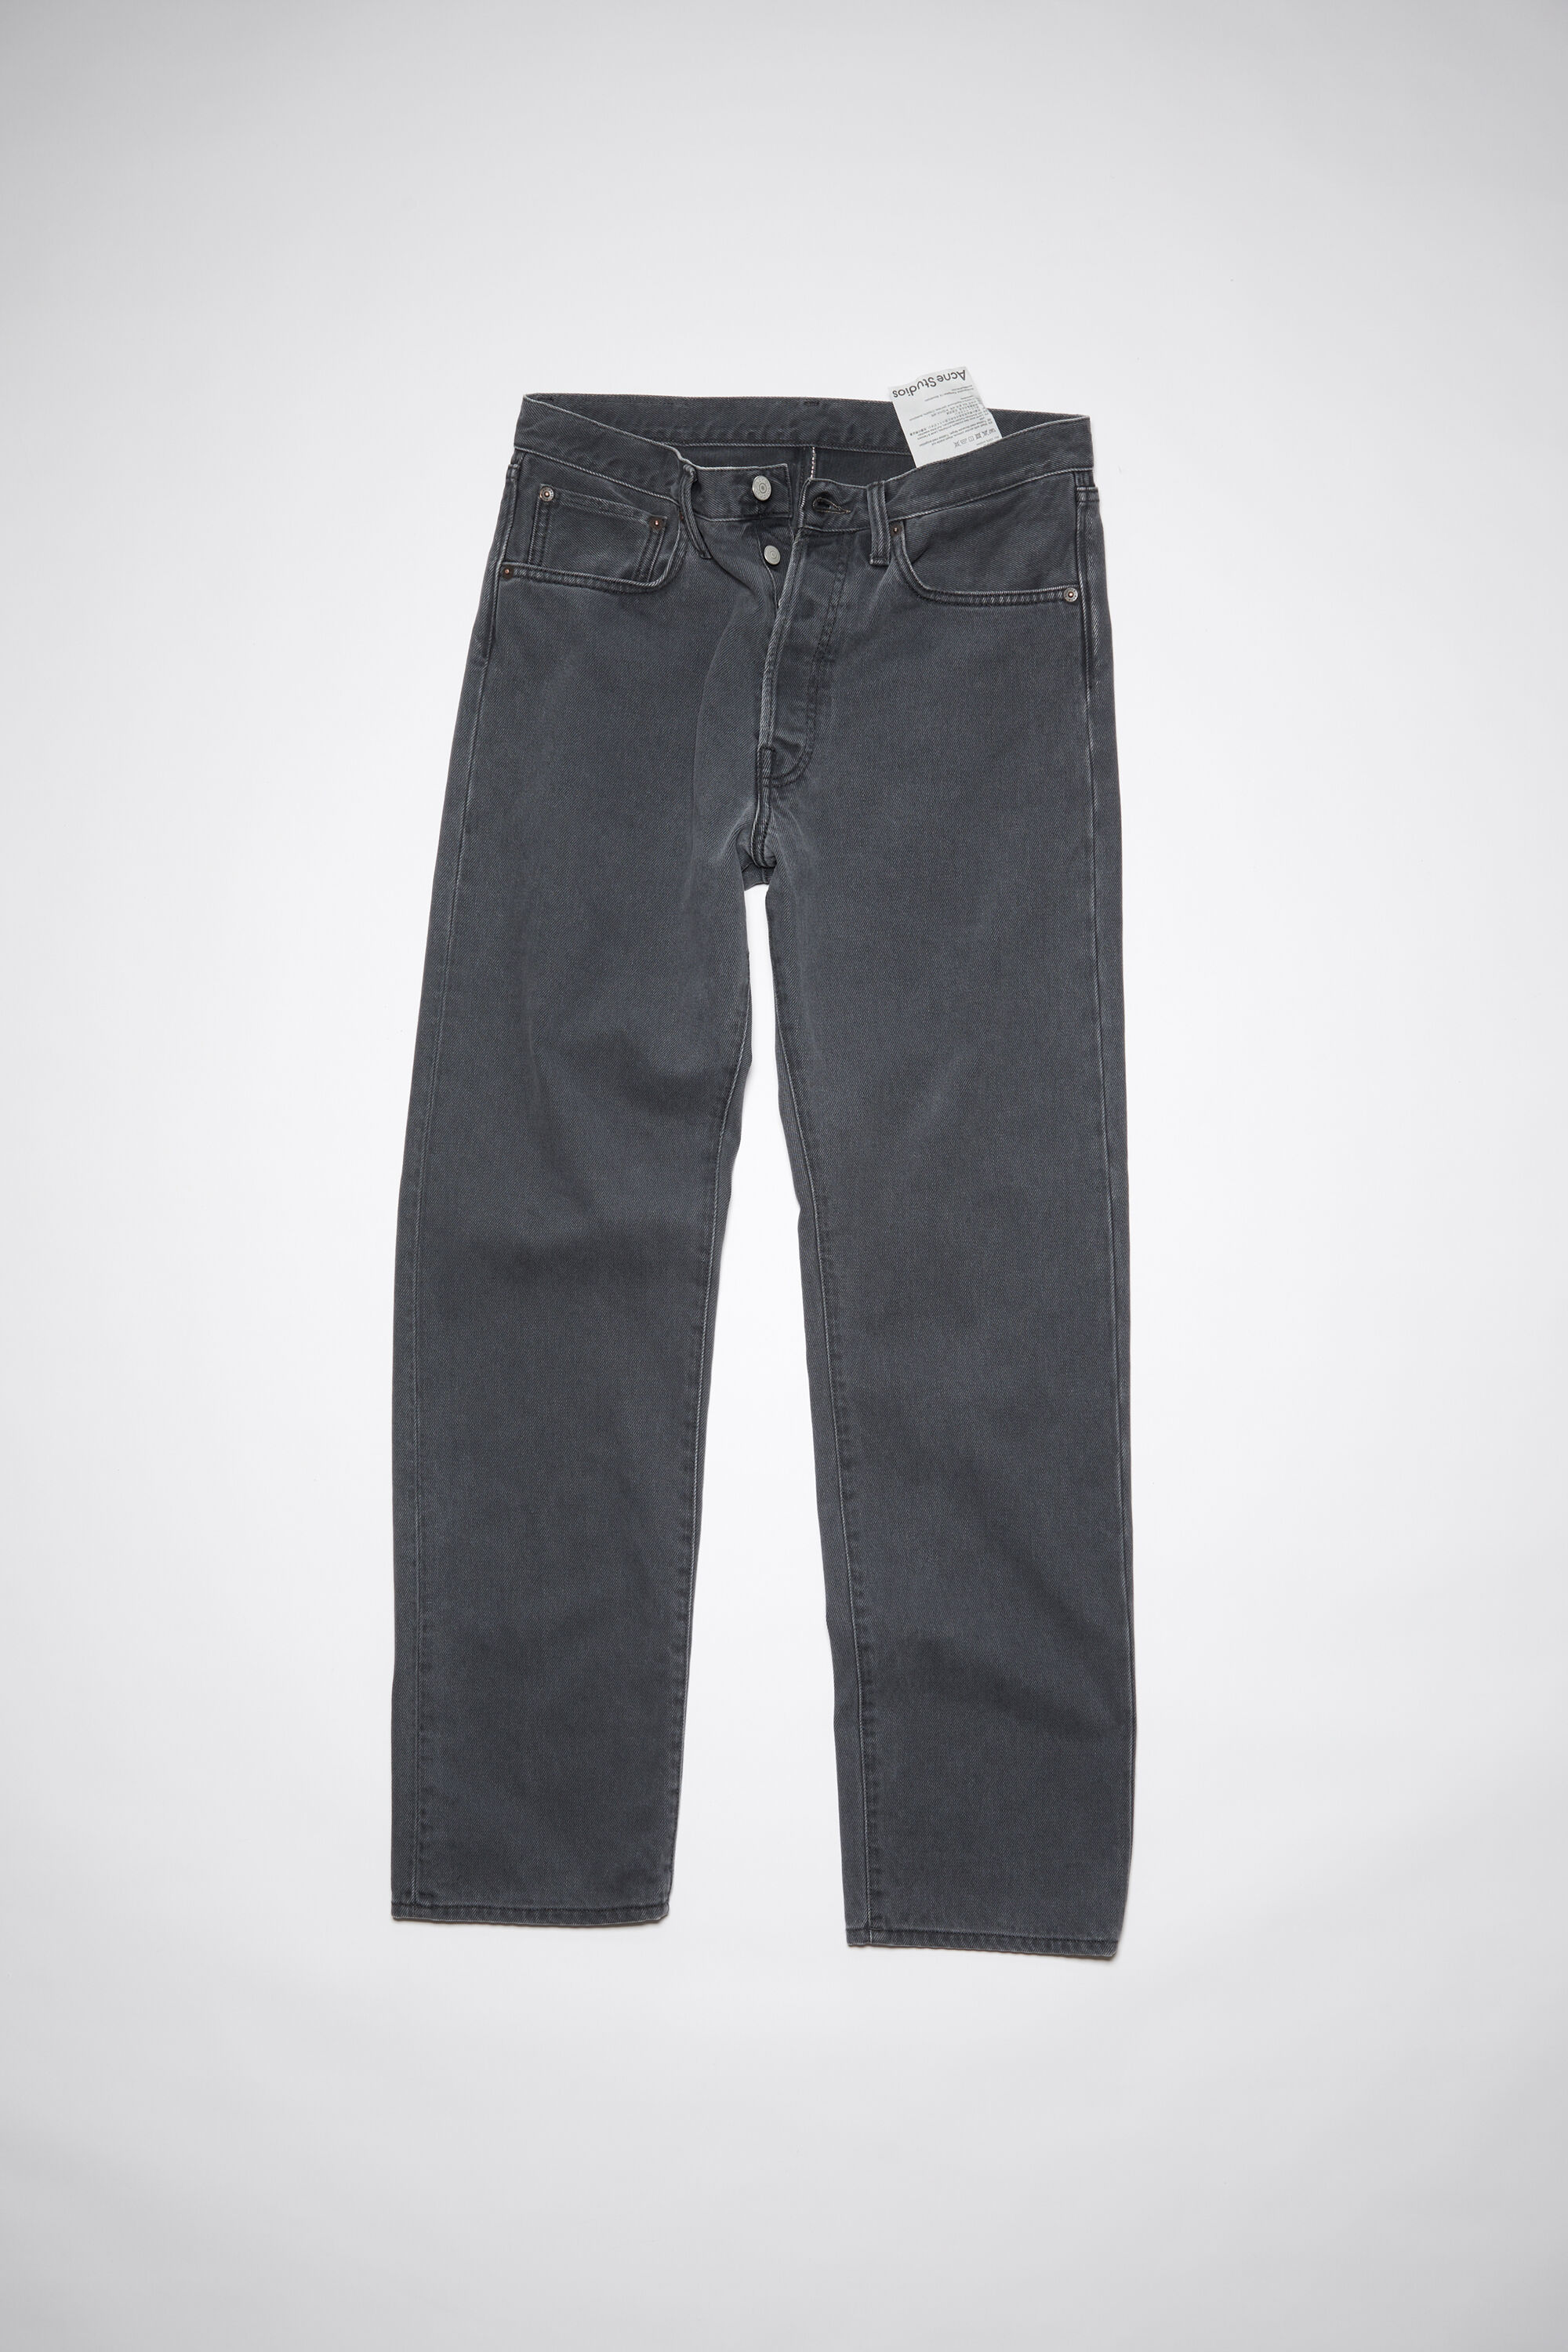 Vintage Mens Faded Black Jeans 90s Arizona Denim Jeans Mens Size 34x31 34  Waist X 31 Inseam - Etsy